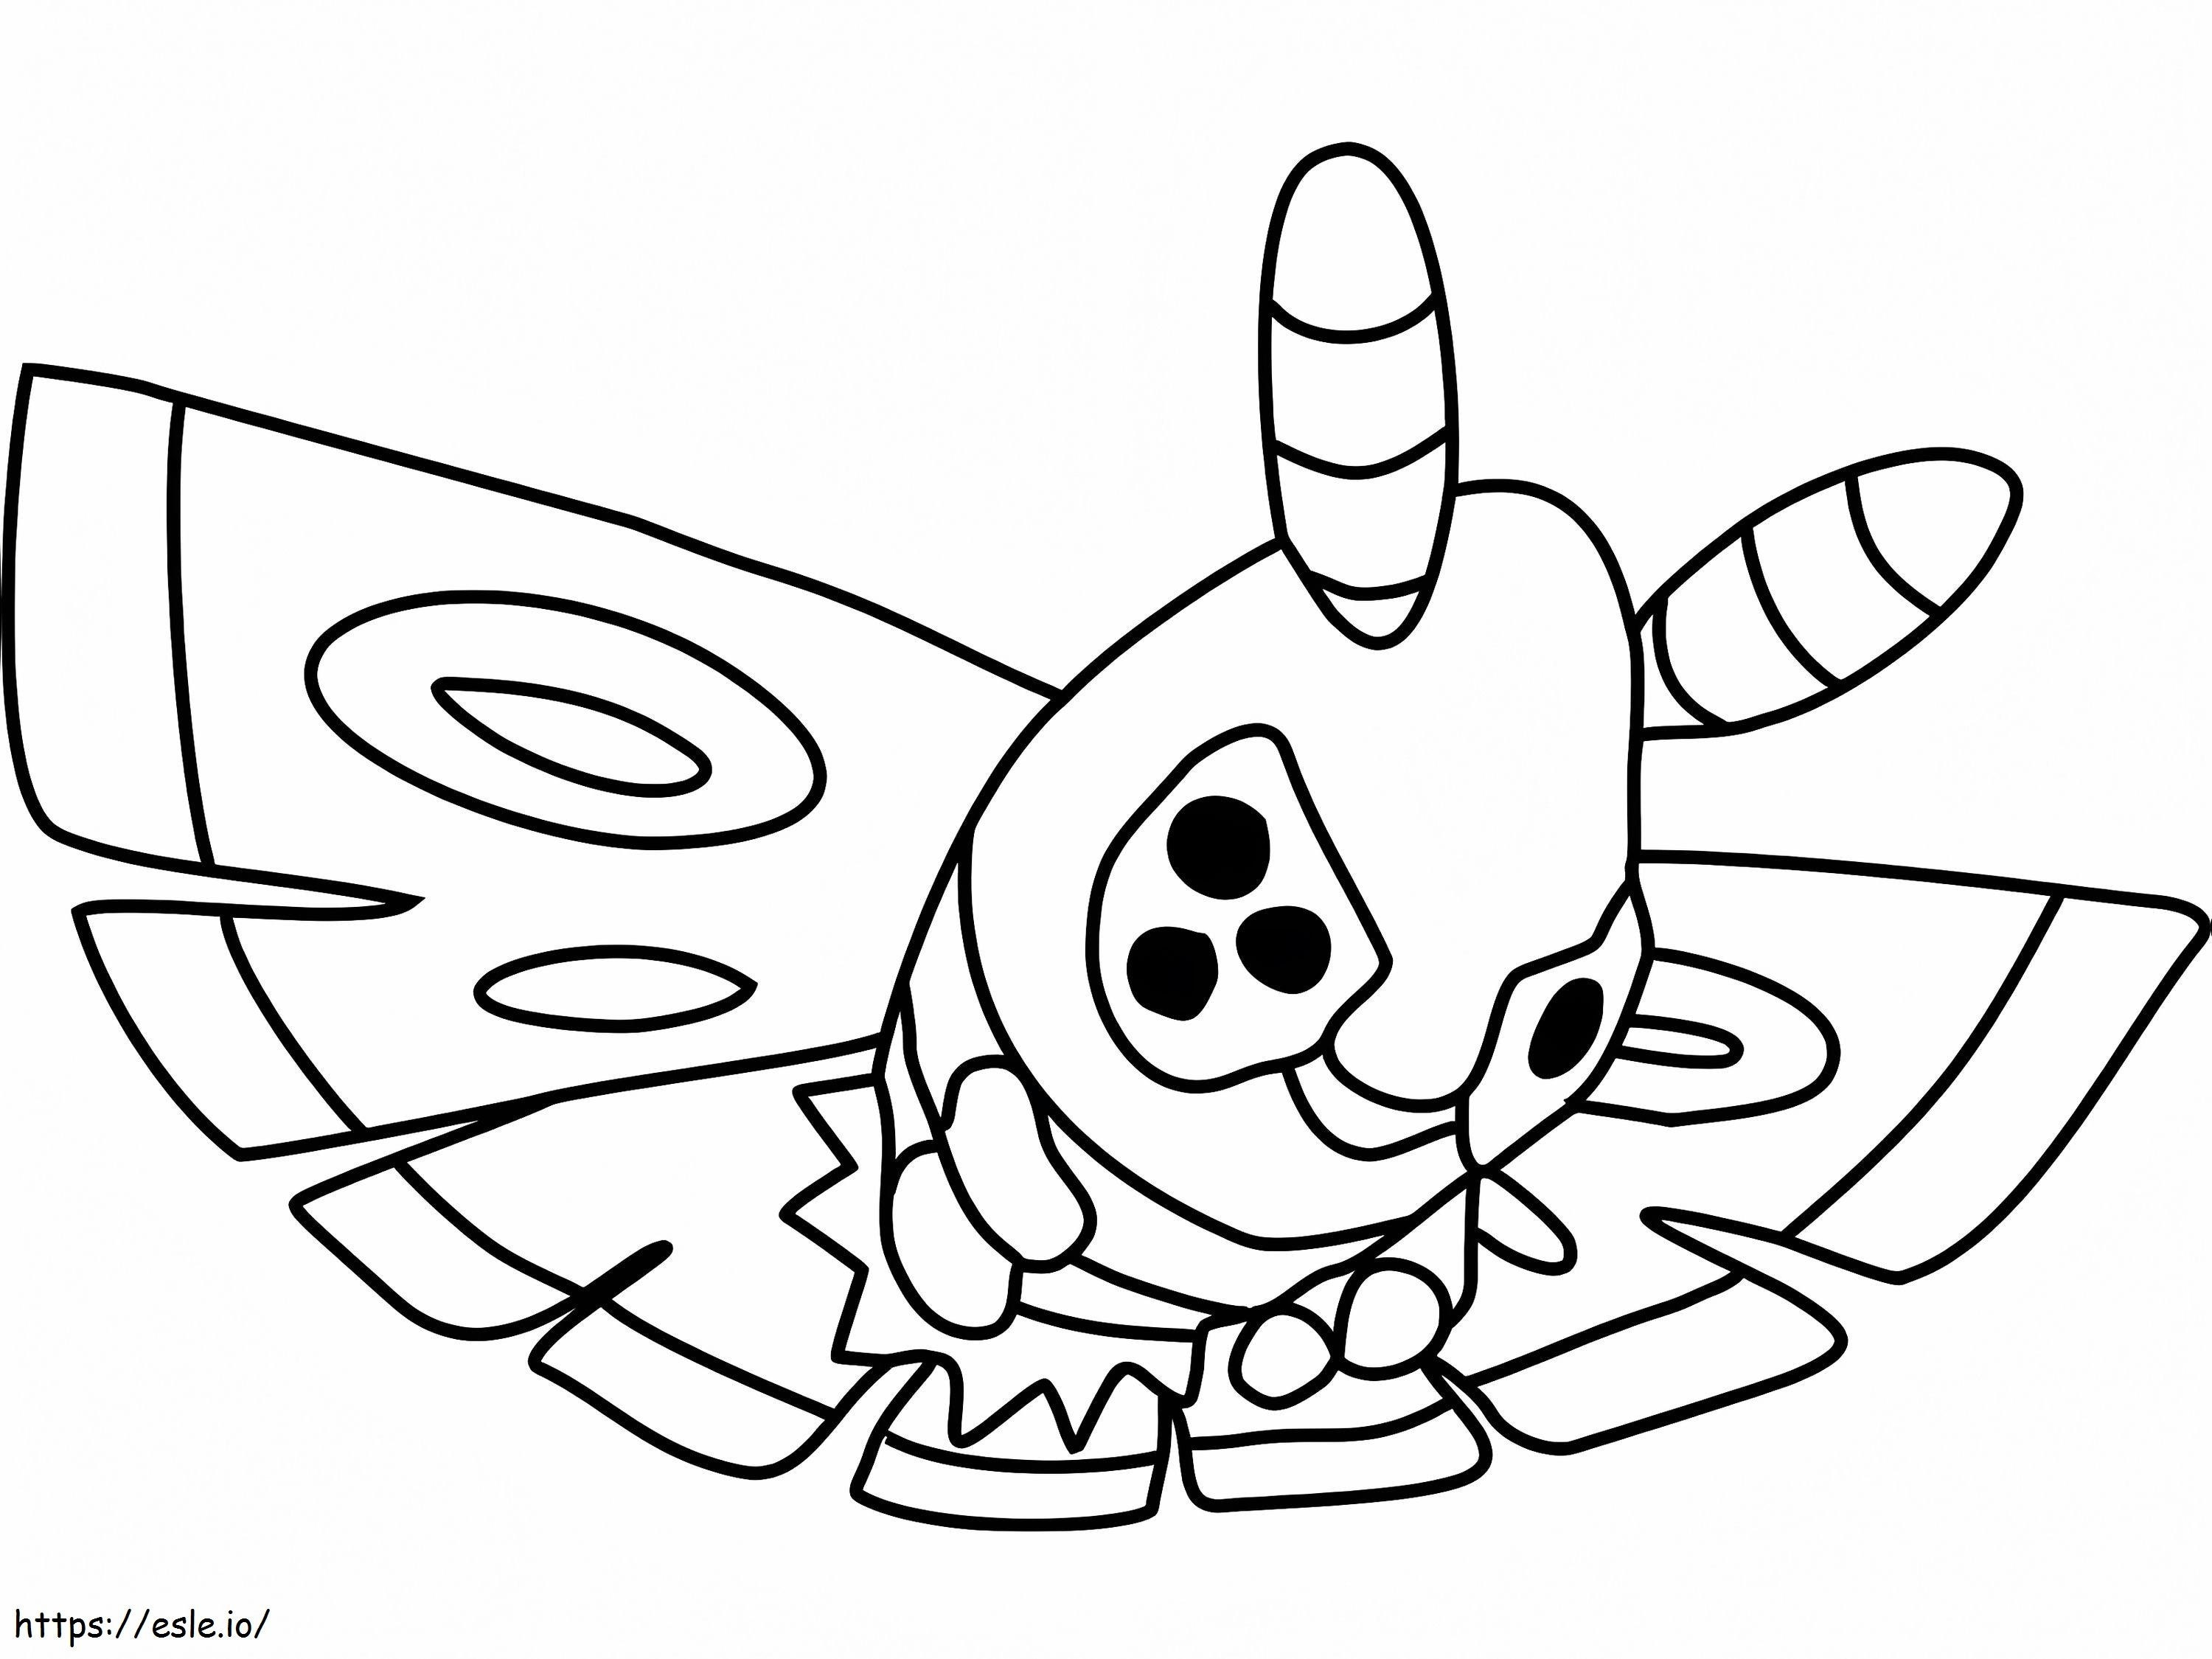 Printable Dustox Pokemon coloring page